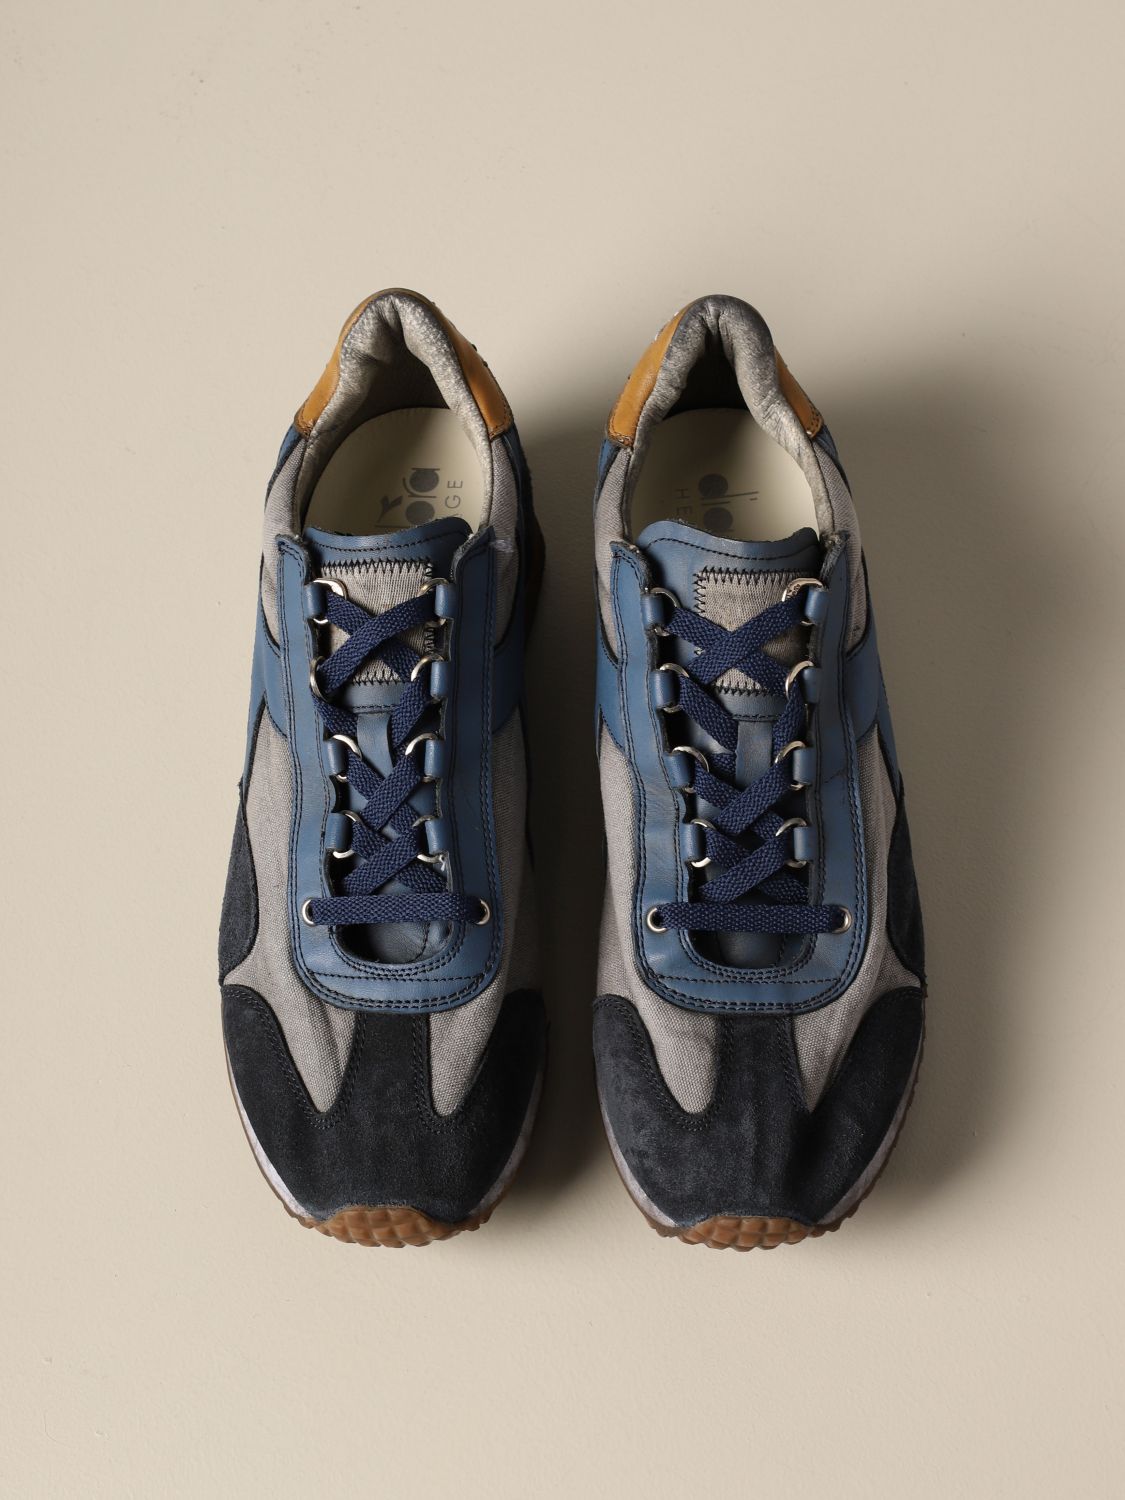 Diadora Heritage Outlet: Shoes men | Sneakers Diadora Heritage Men ...